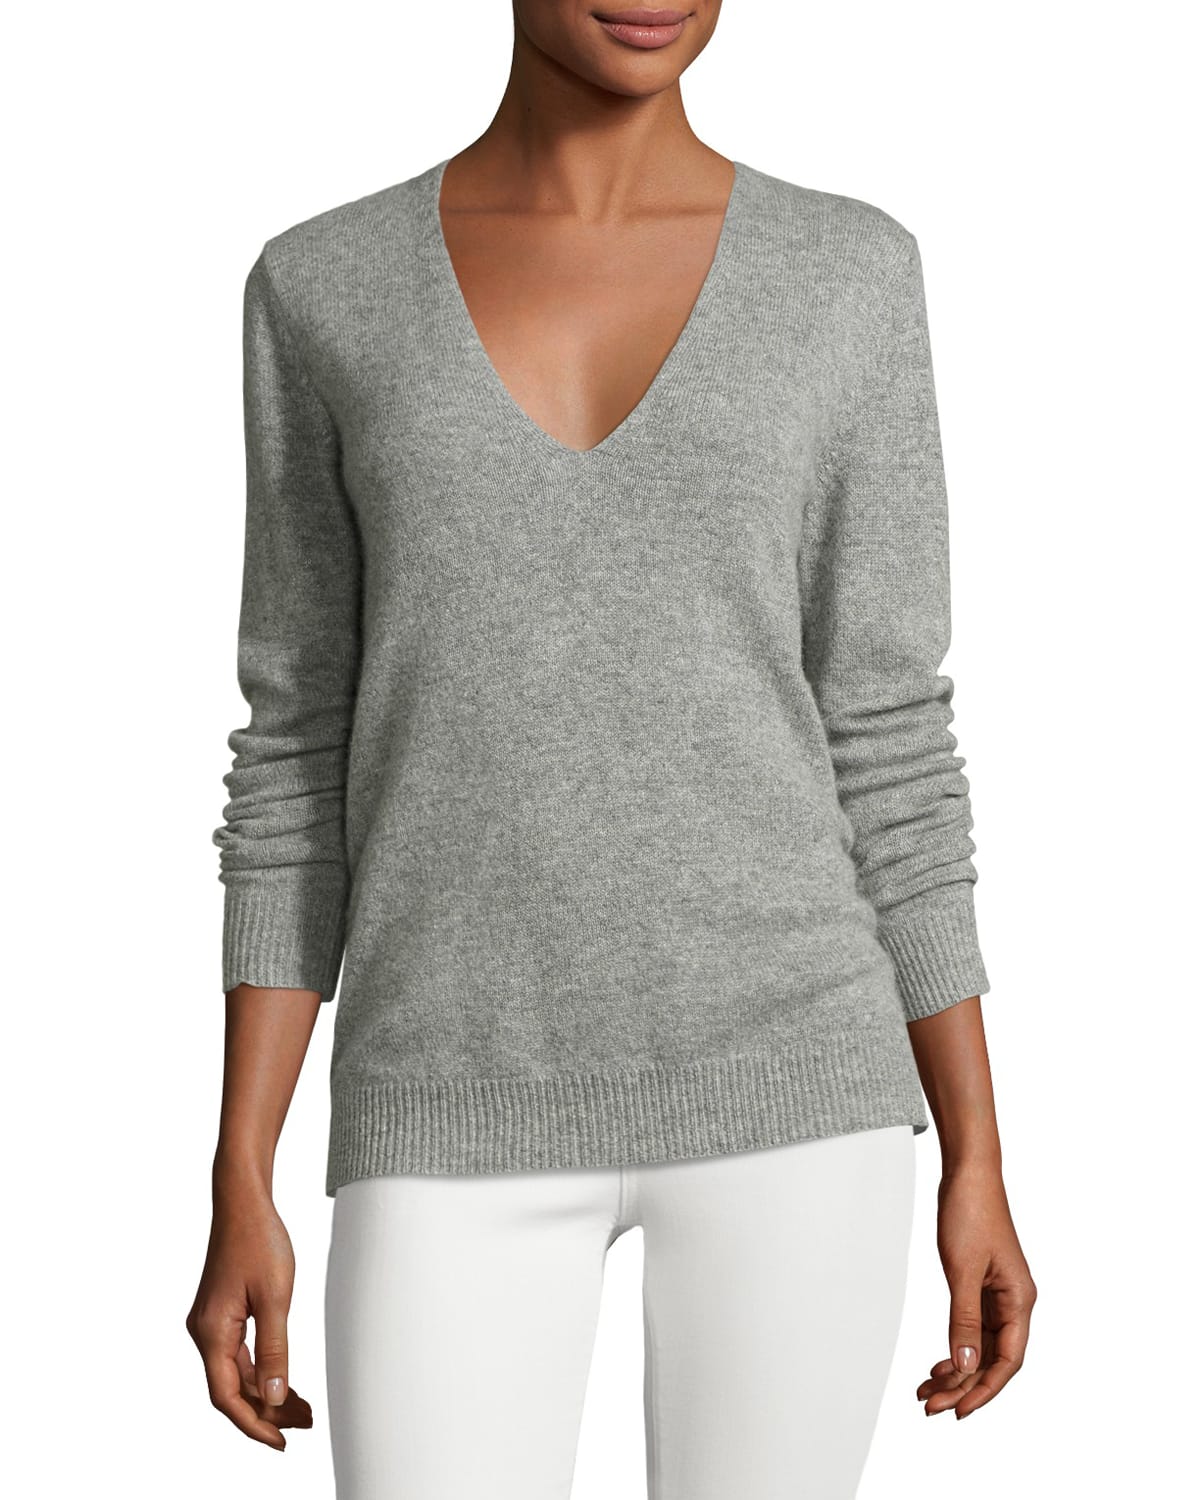 Adrianna Cashmere V-Neck Sweater